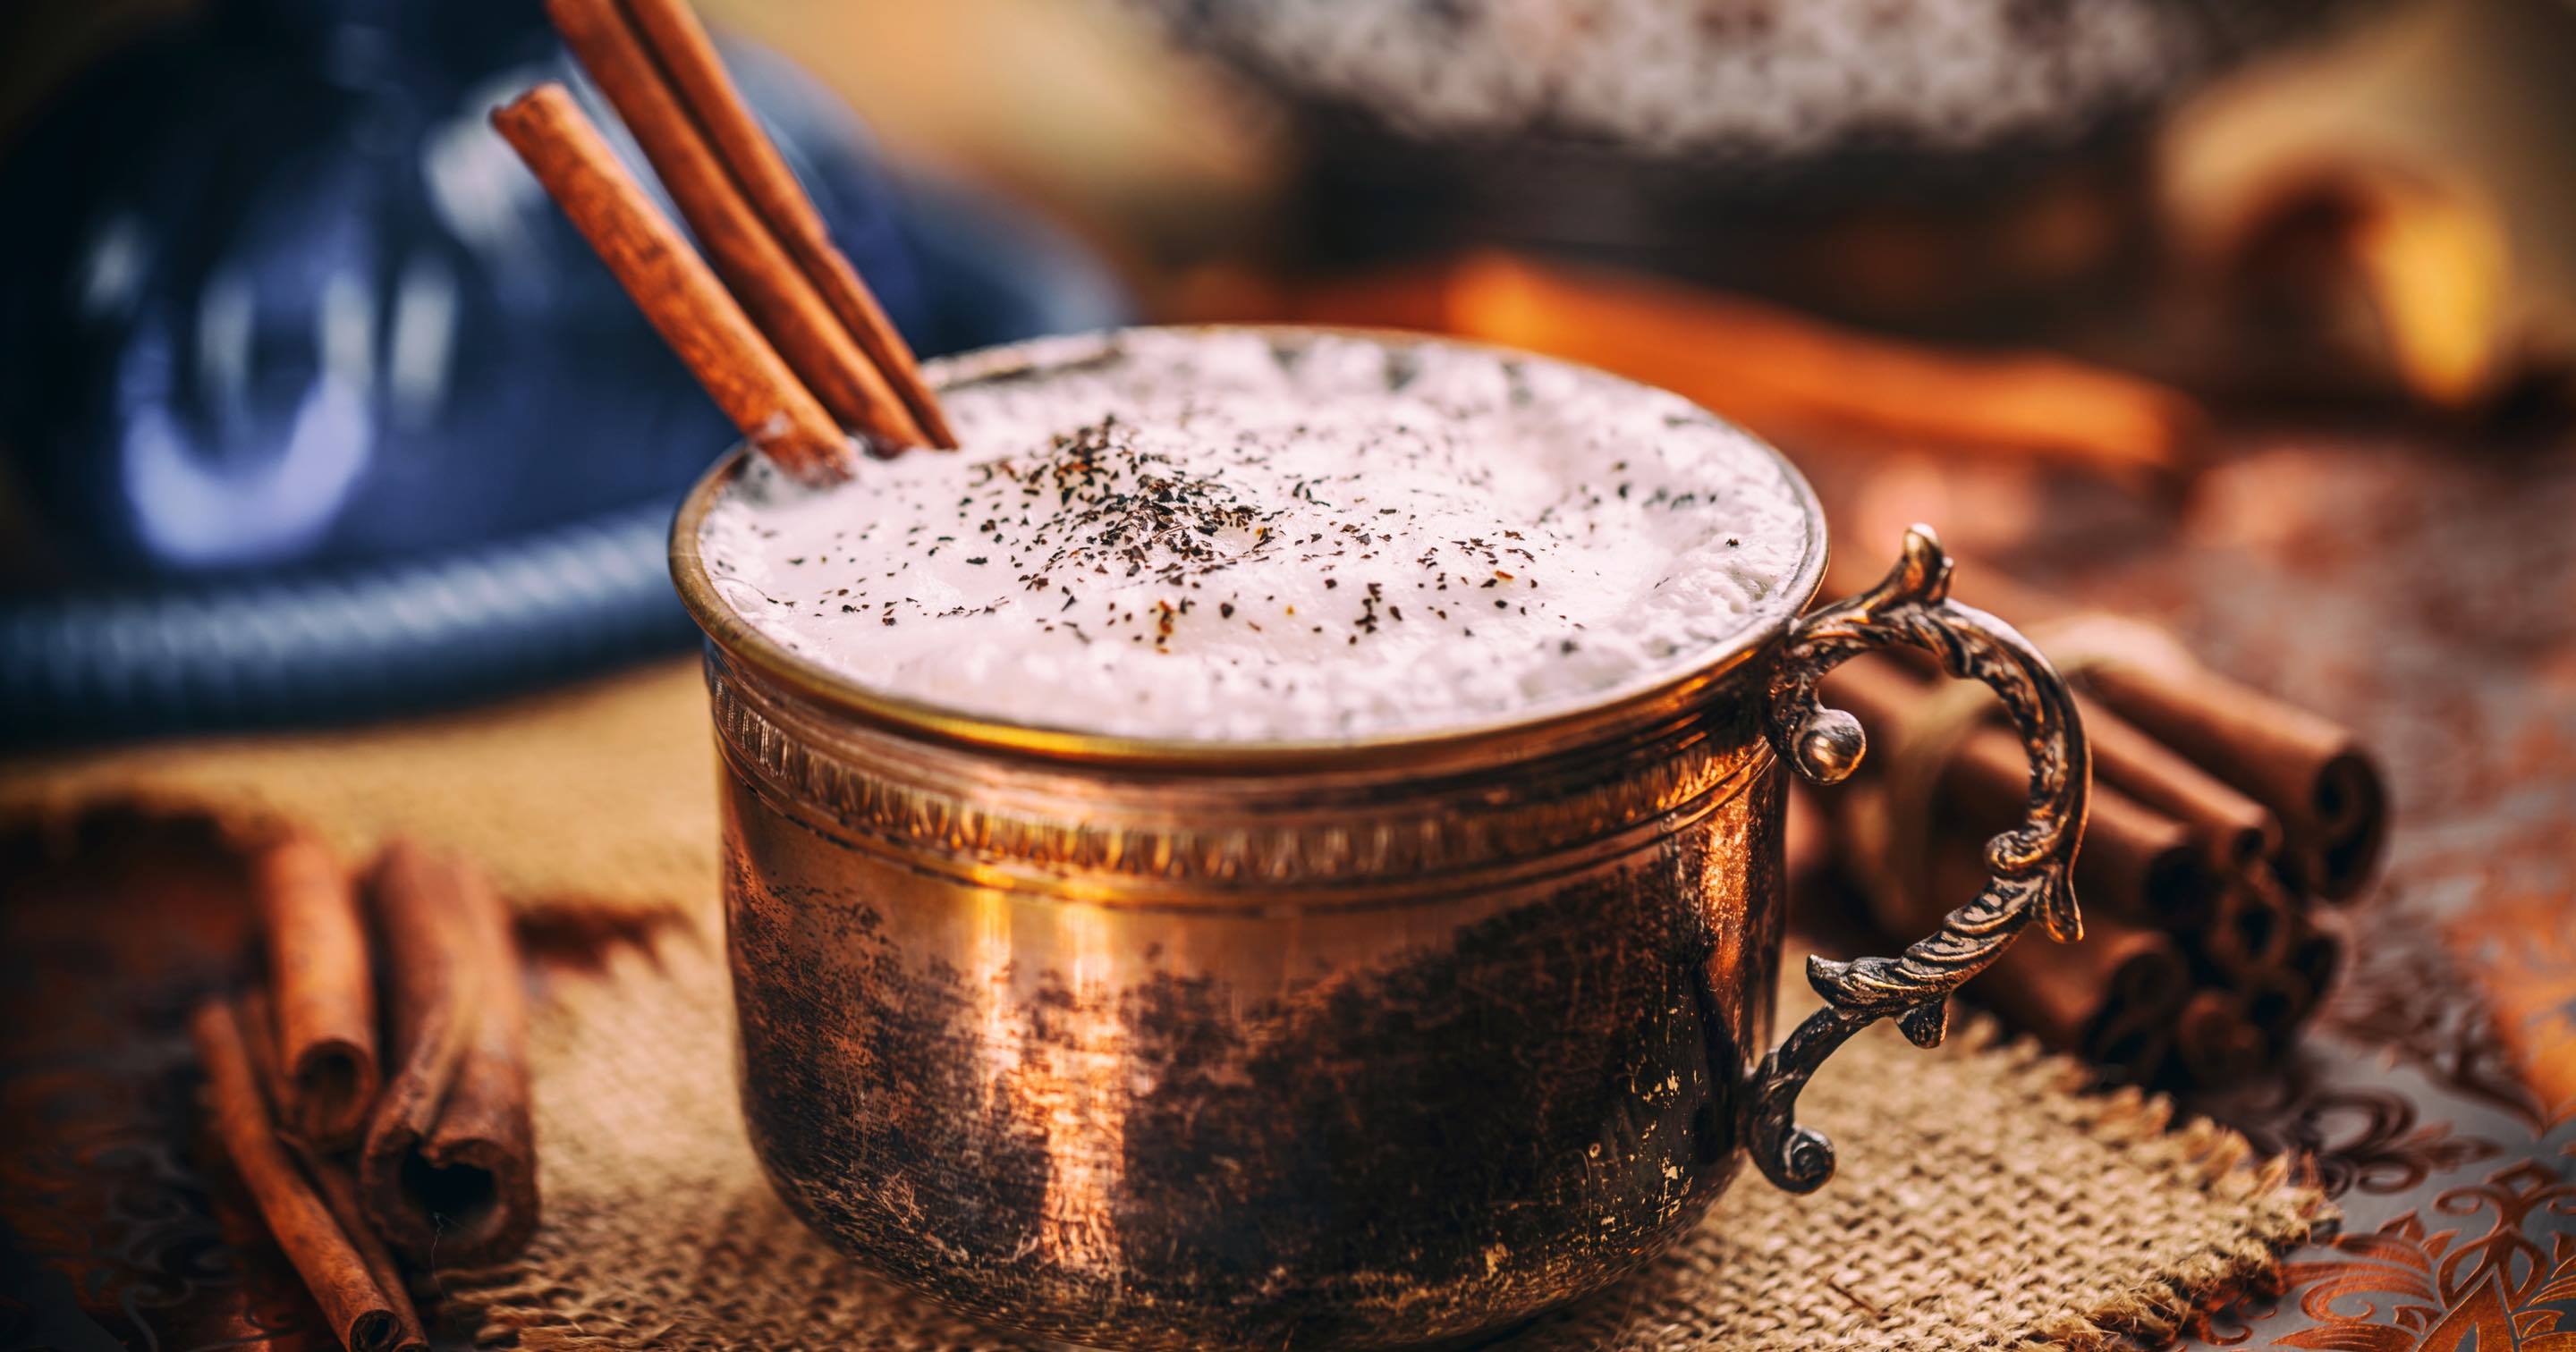 Vanilla Chai Tea Latte - A Homemade Chai Tea Latte Recipe